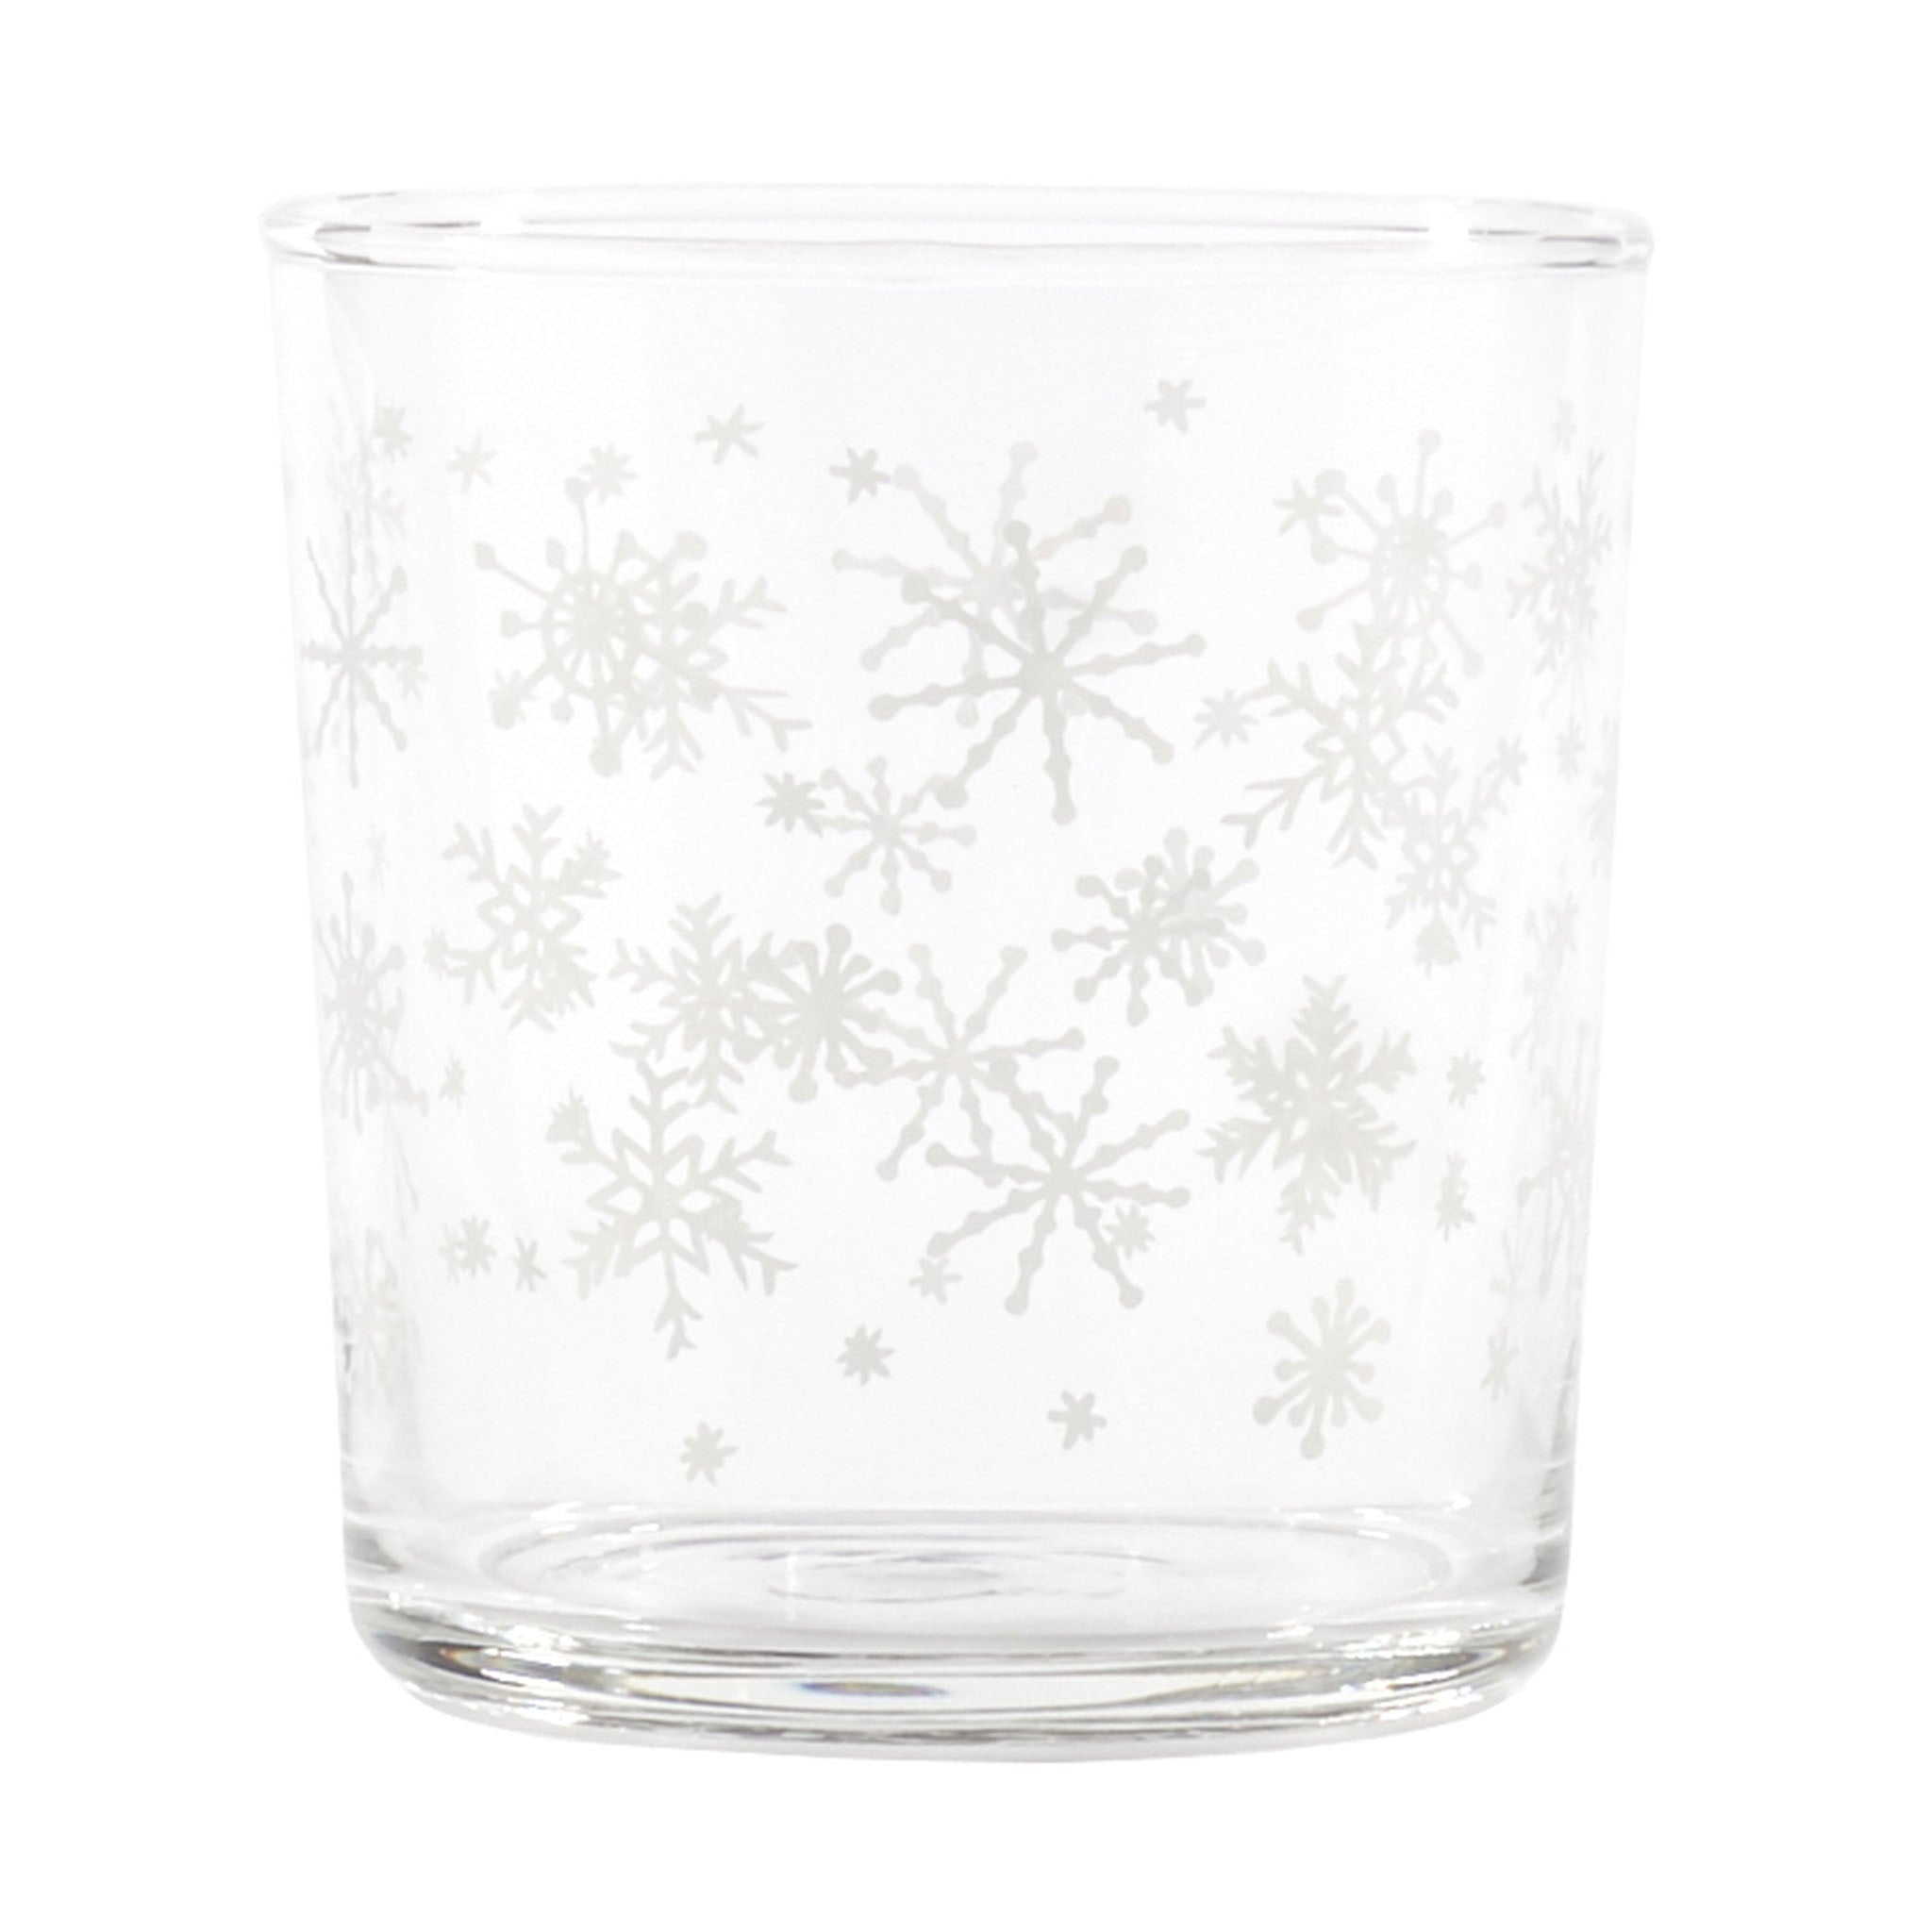 Set 6 snow water glasses